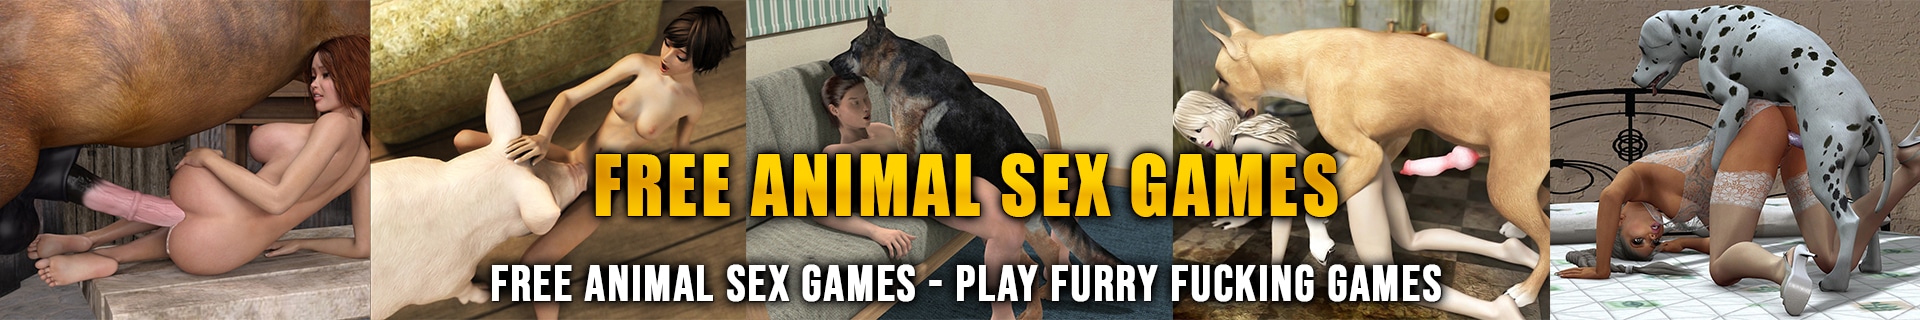 Free Online Animal Sex